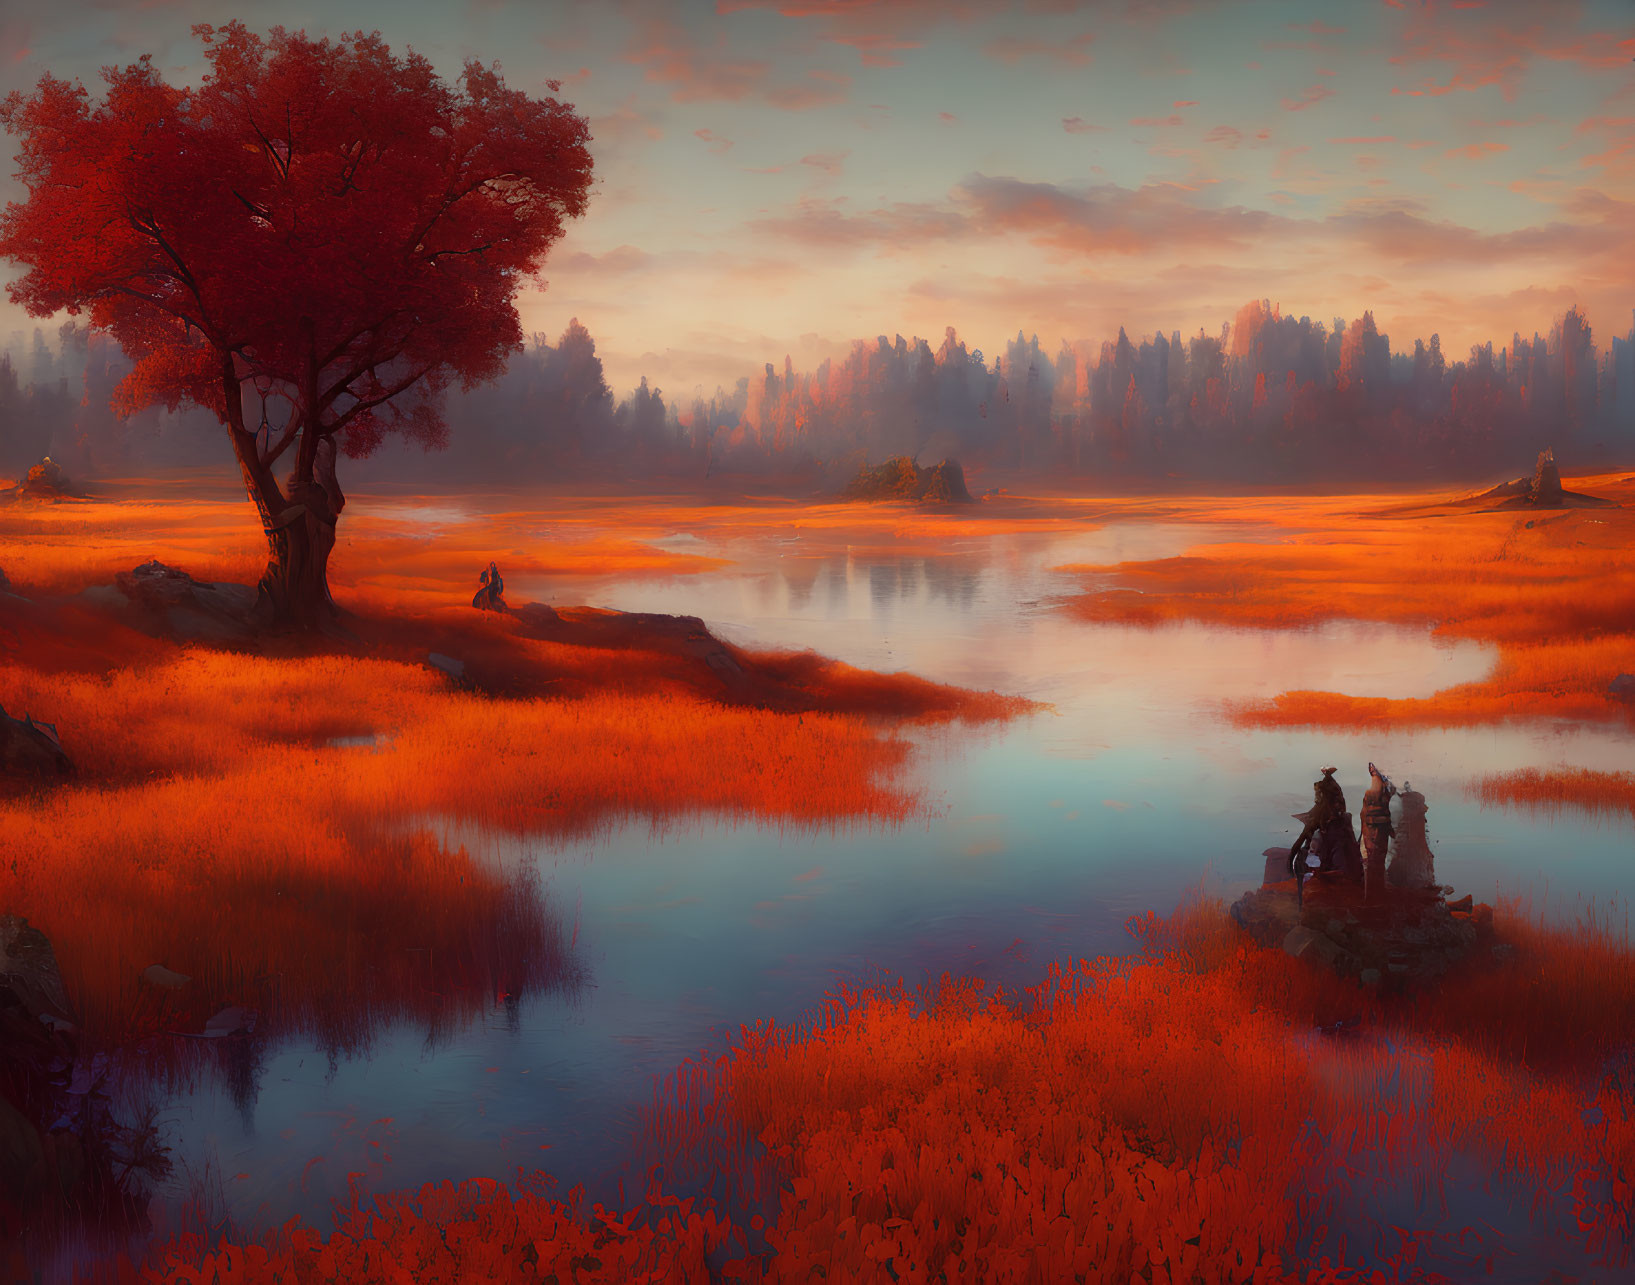 Tranquil dusk scene: red tree, serene lake, autumn grass, figures on island